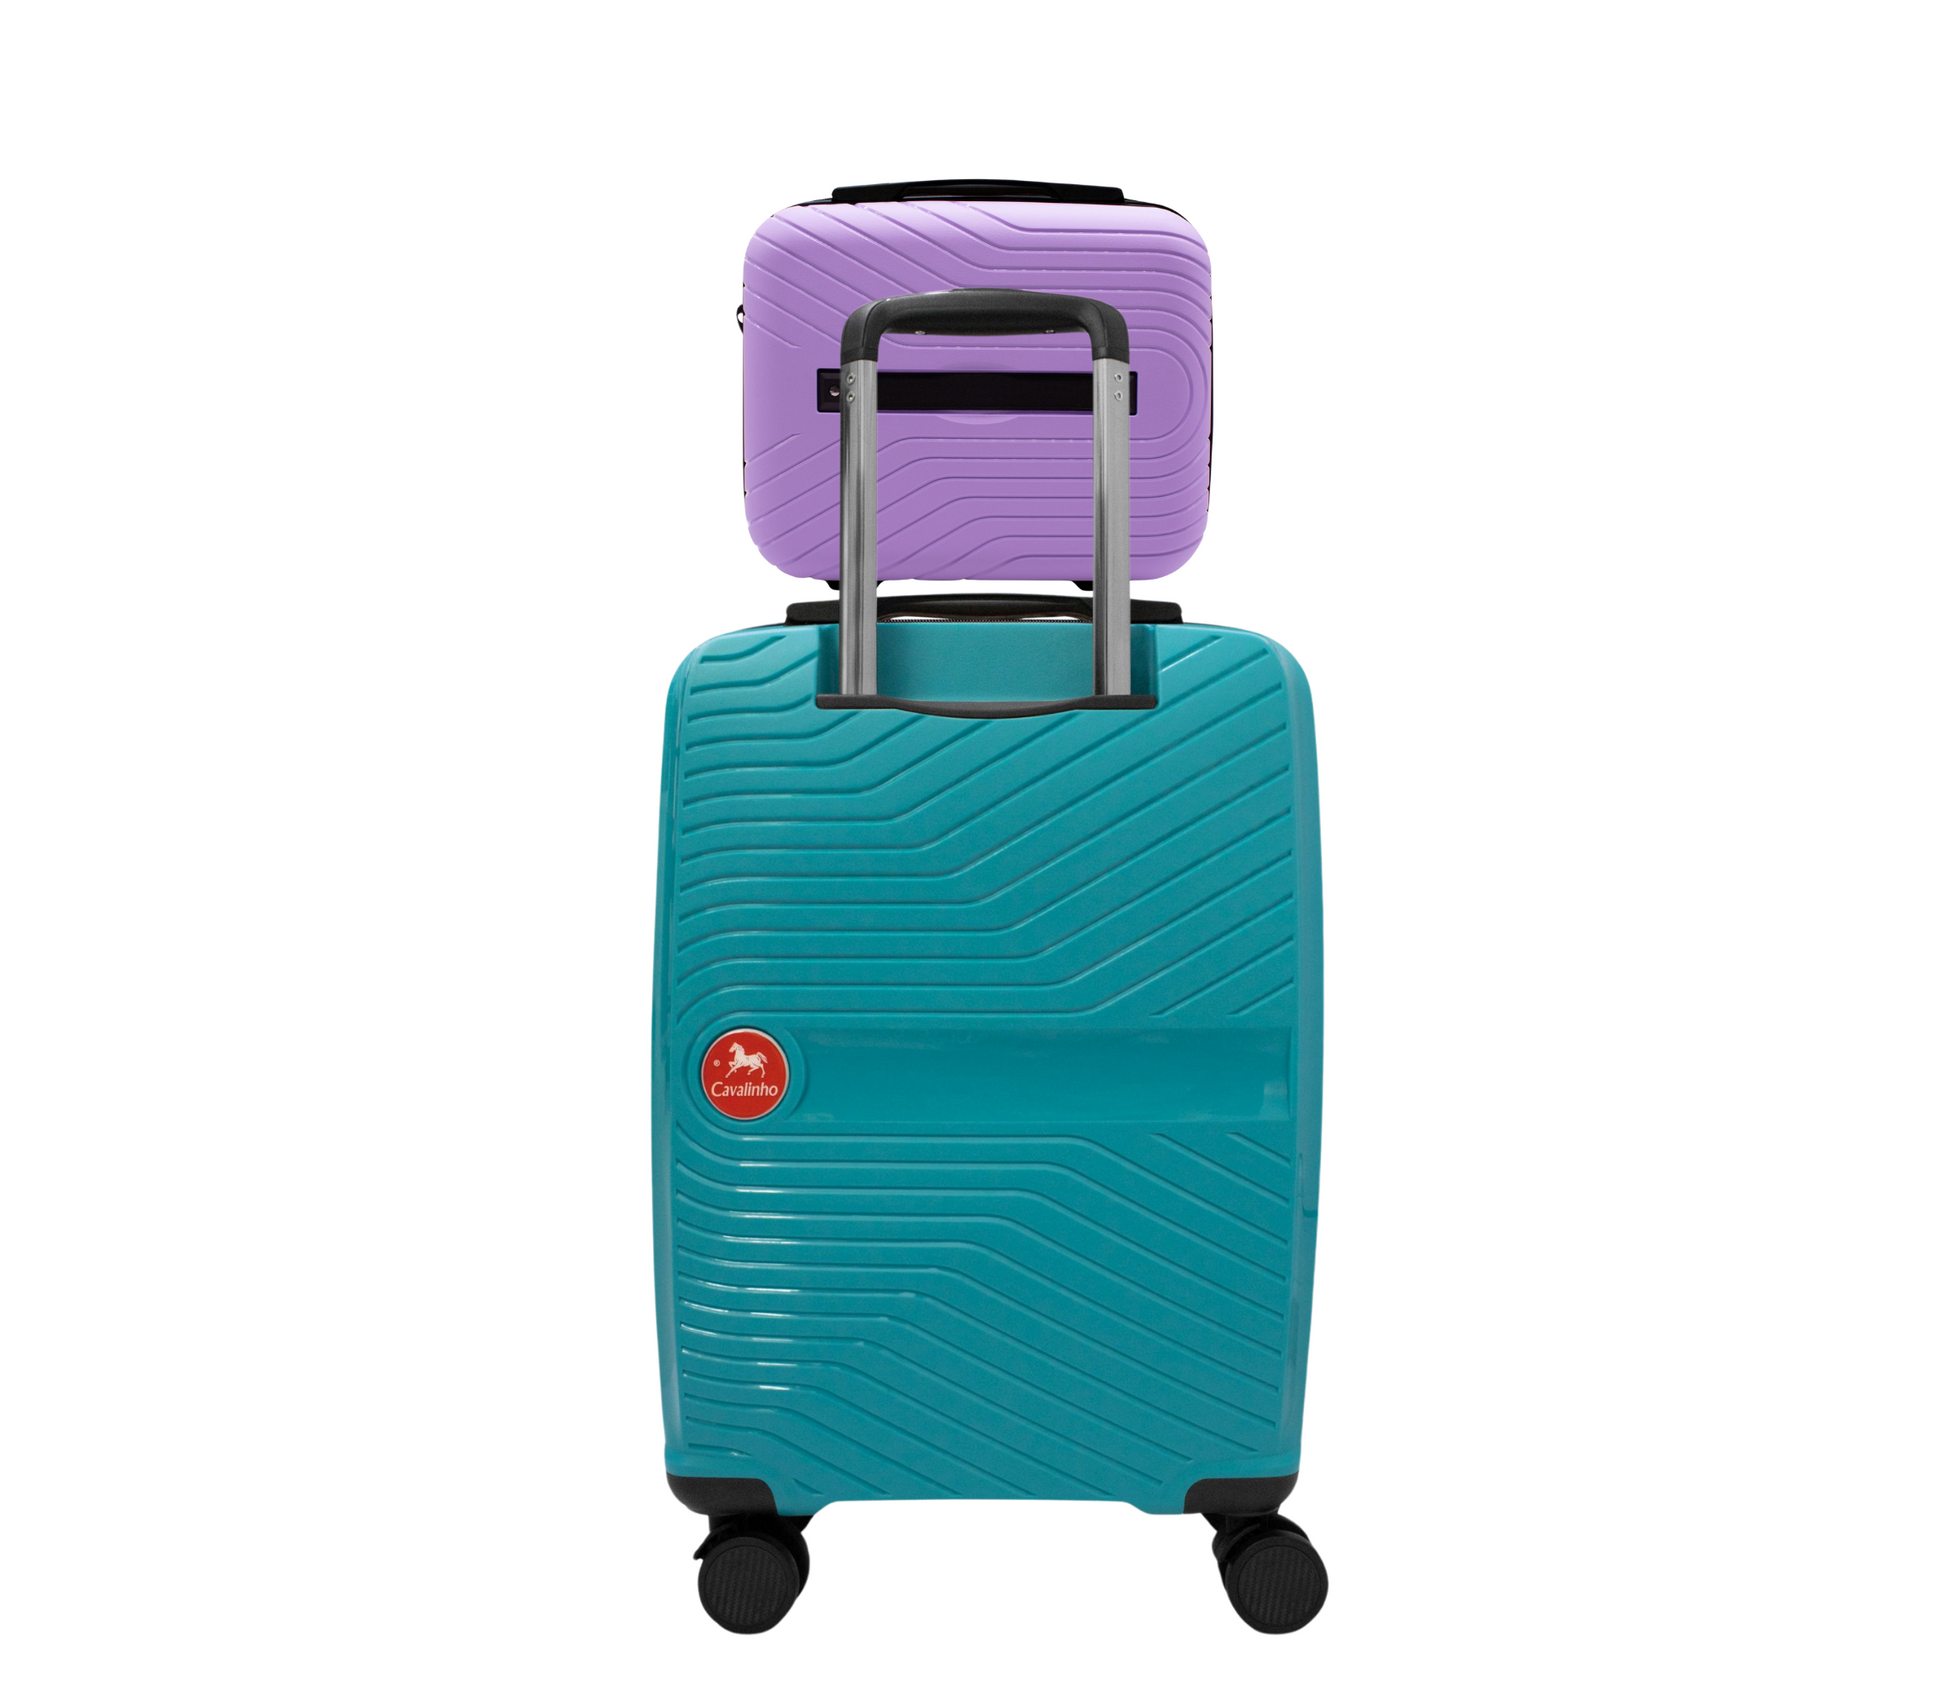 Cavalinho Canada & USA Colorful 2 Piece Luggage Set (15" & 19") - Lilac DarkTurquoise - 68020004.3925.S1519._2